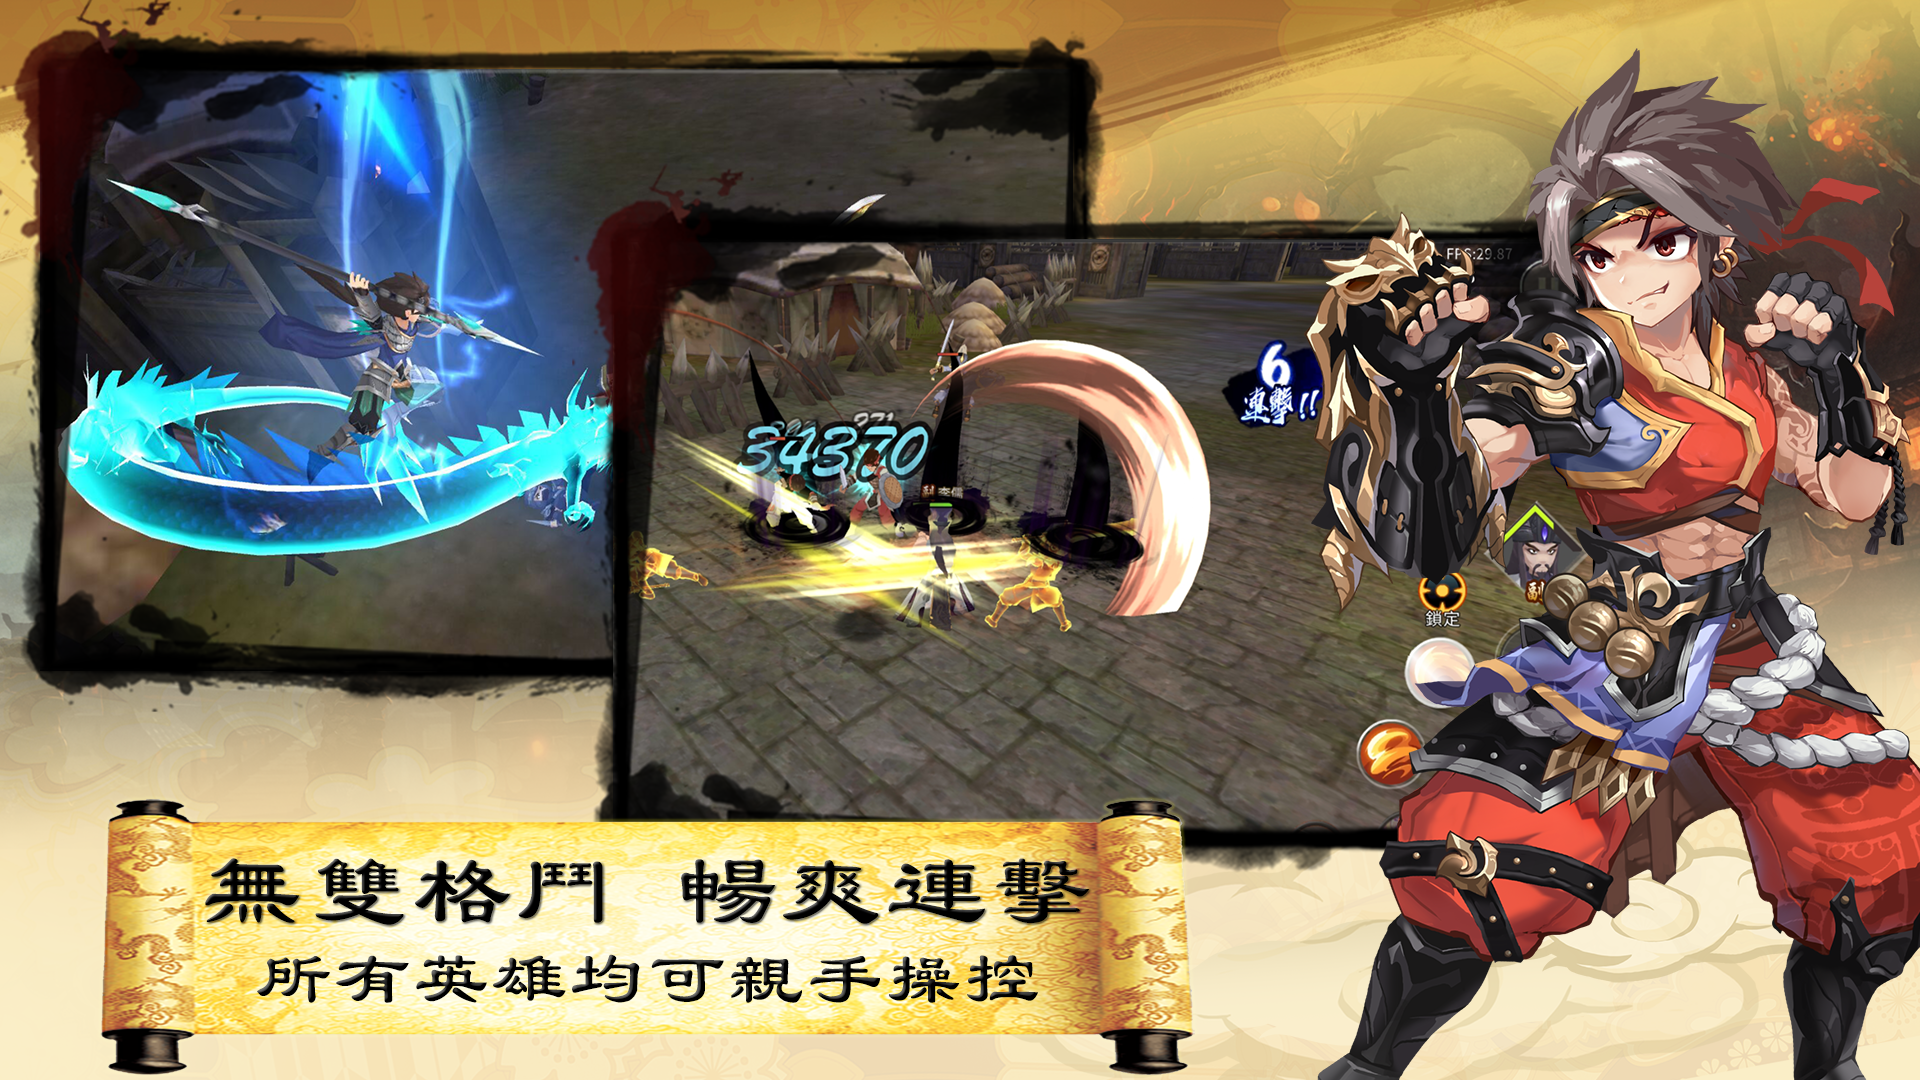 Screenshot 1 of Huyền Thoại Tam Quốc Anh Hùng Online - Anime Wind Warriors Fighting MMORPG 1.0.34